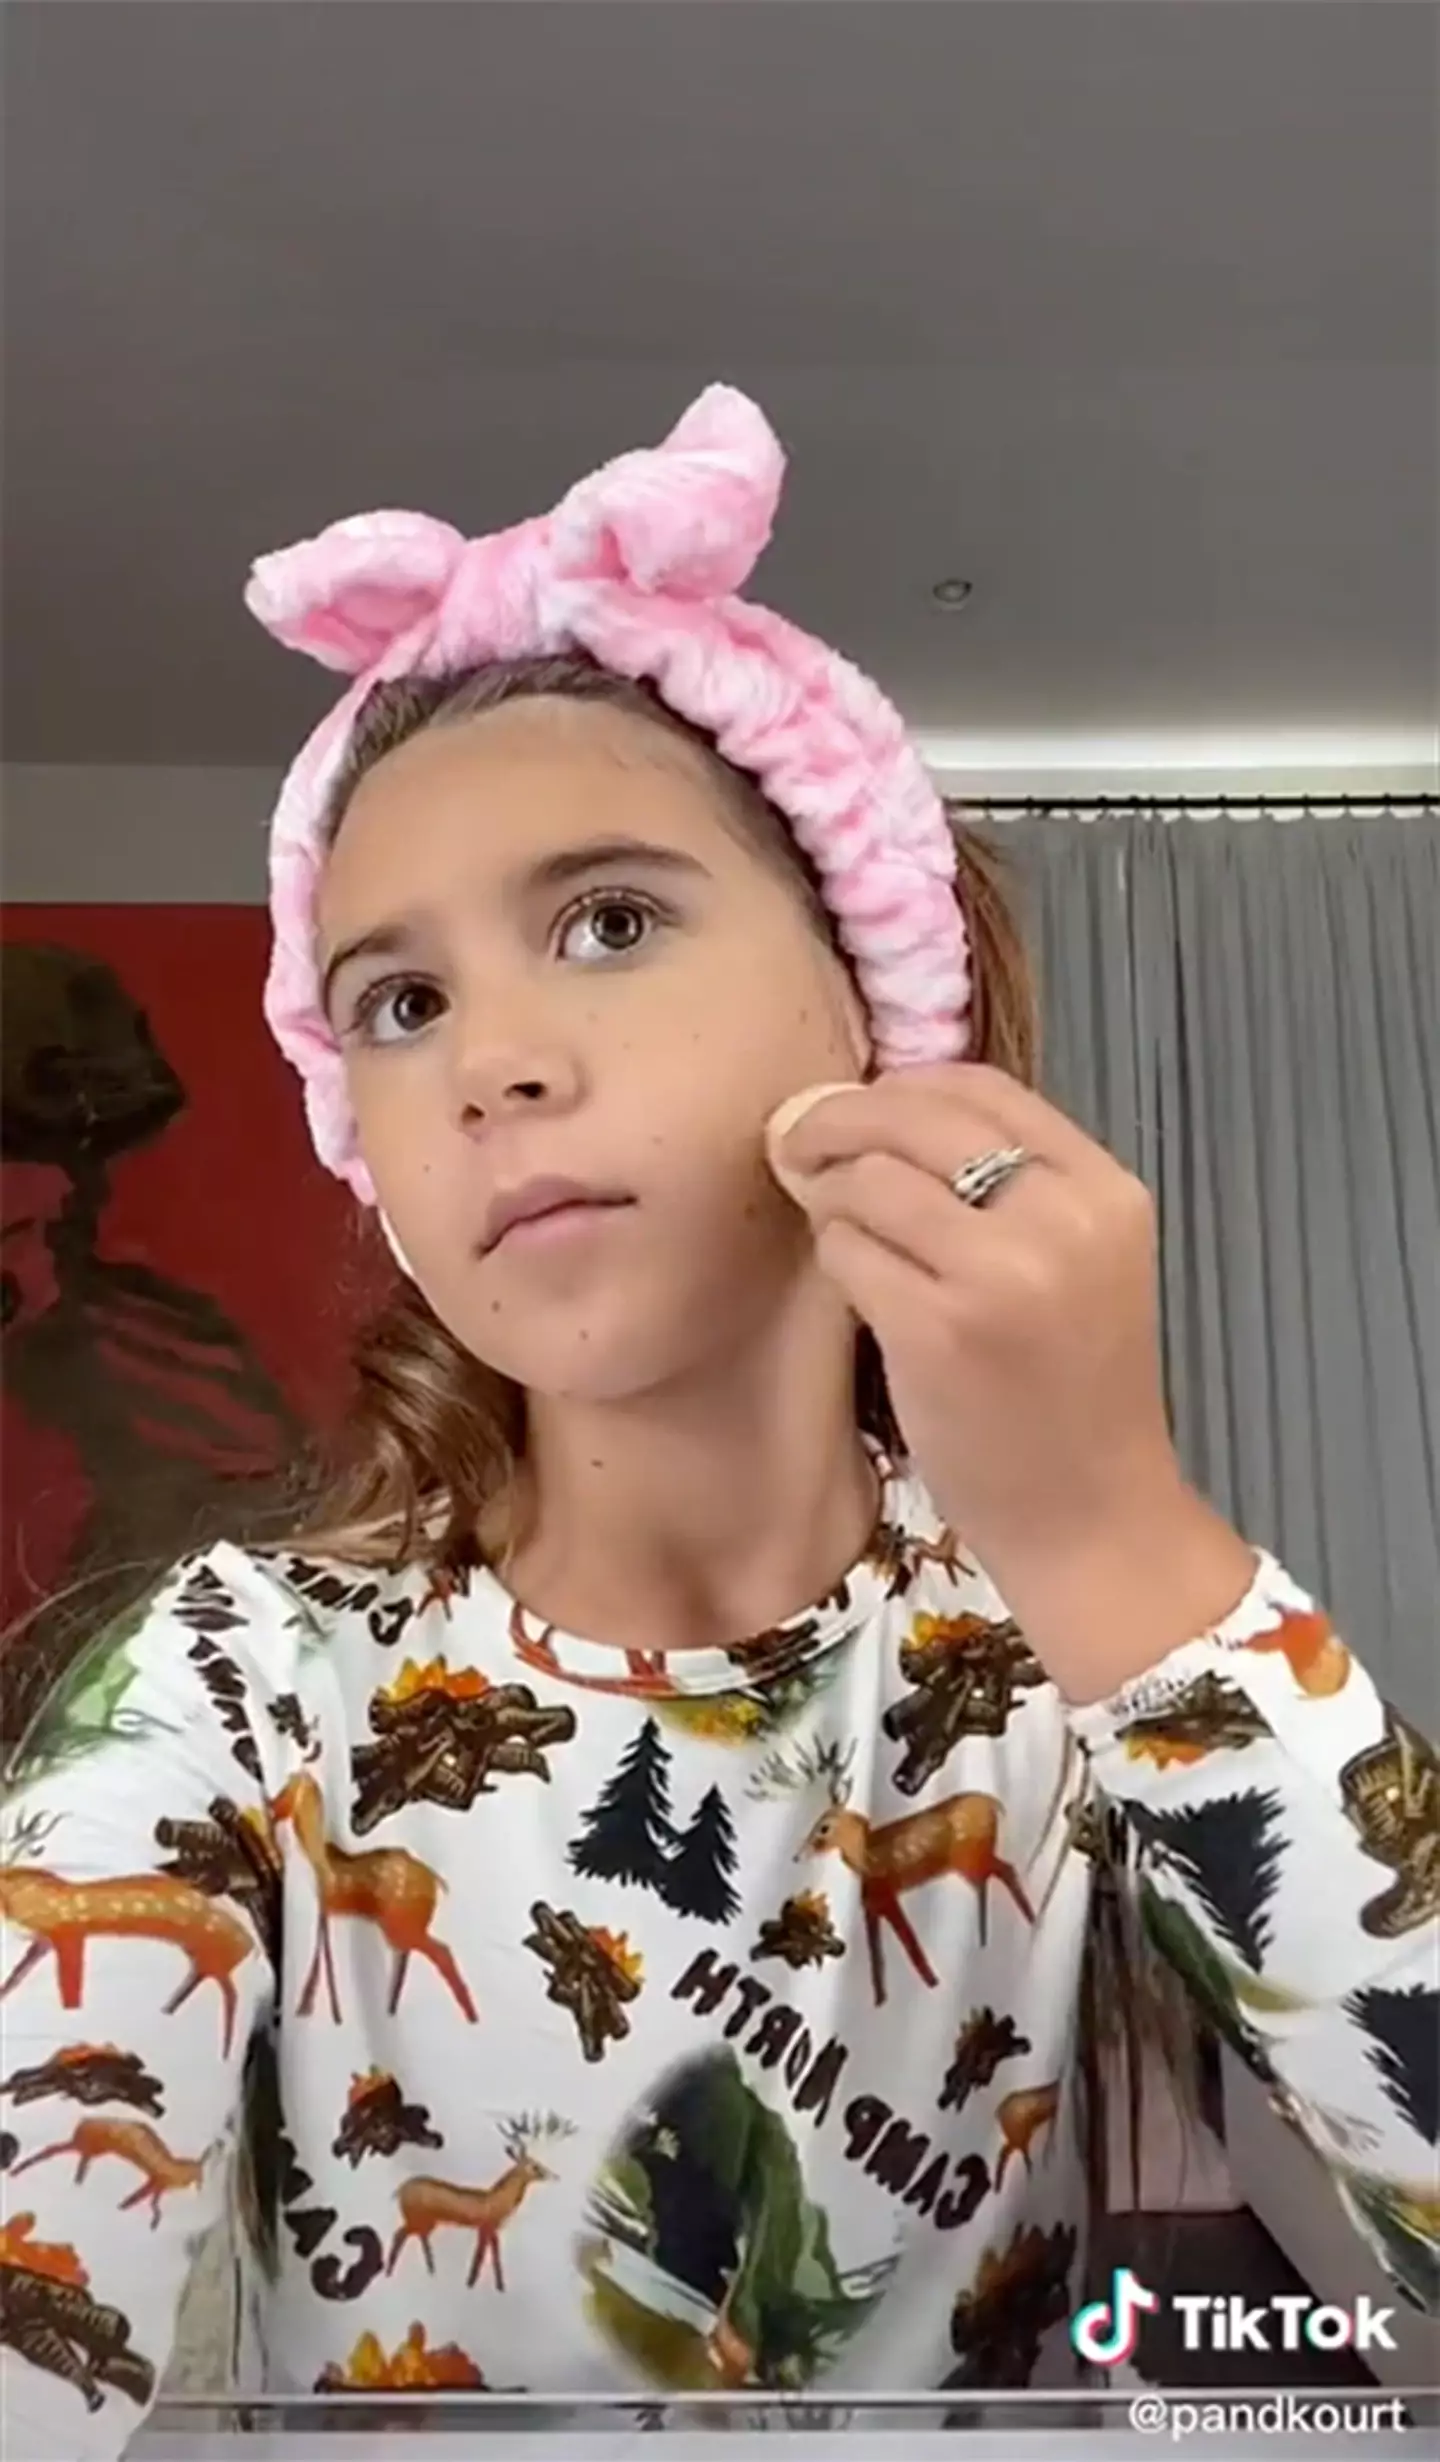 Penelope shared her makeup tutorial on TikTok.